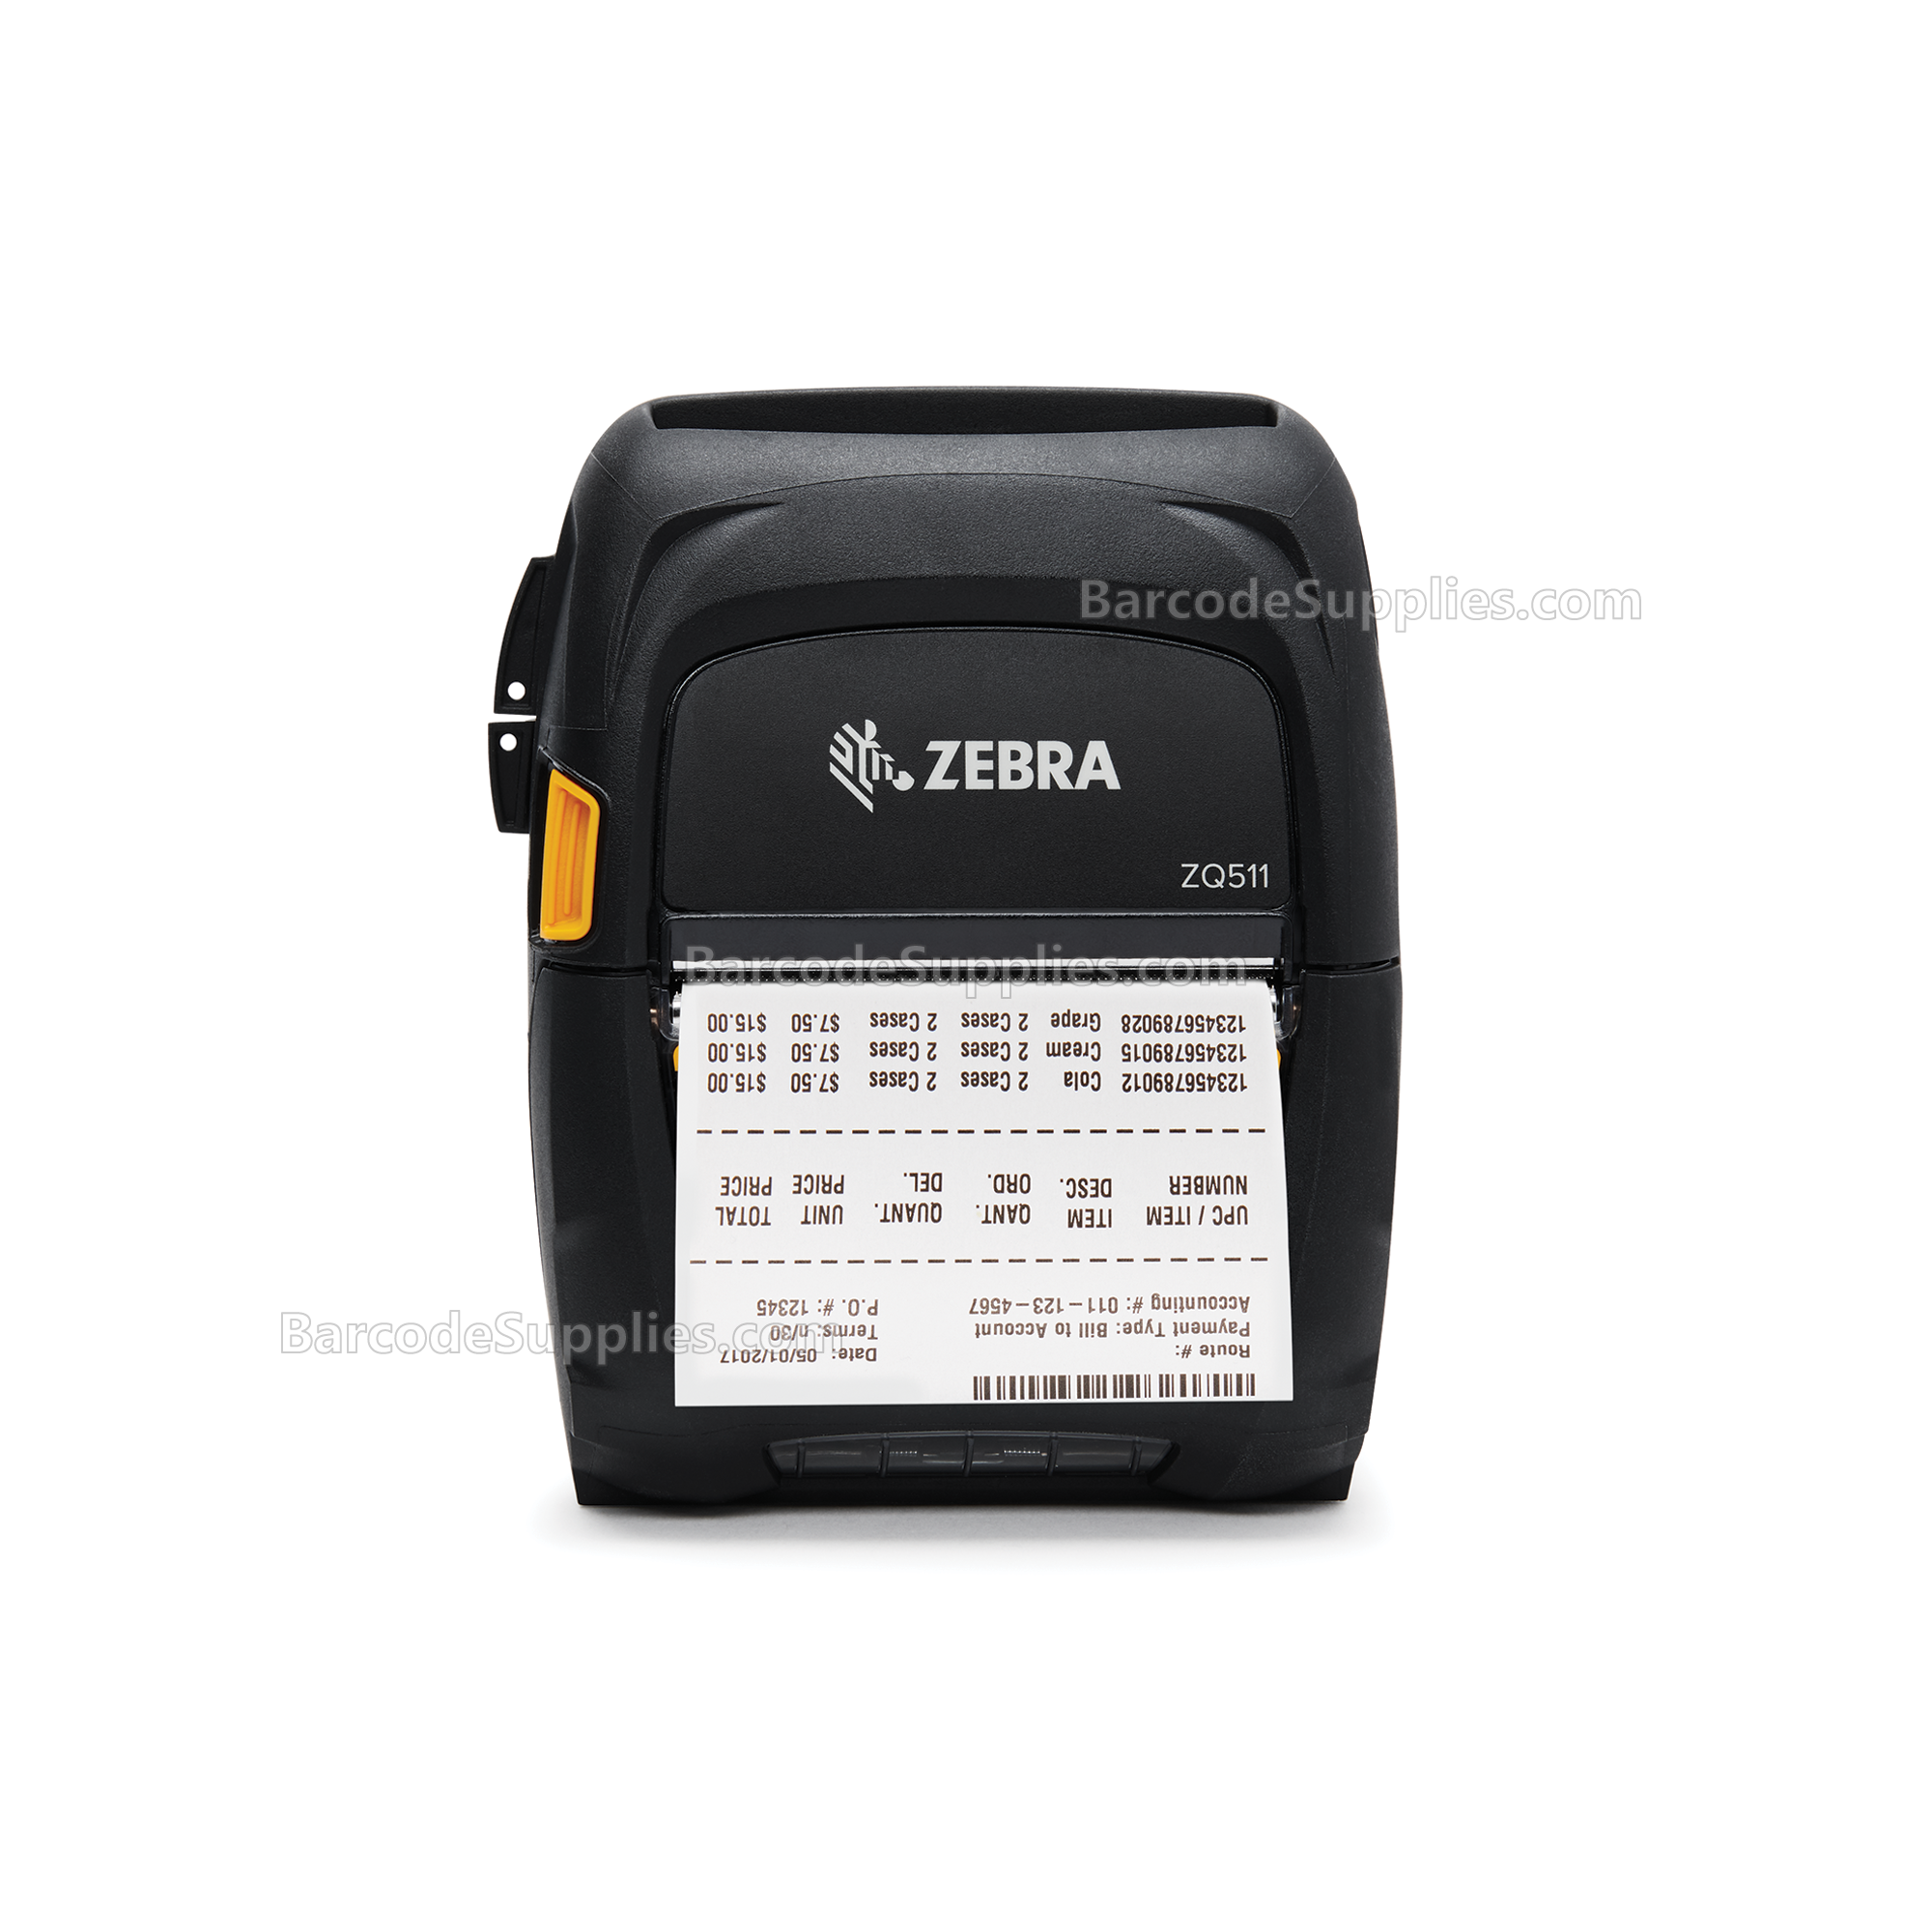 Zebra ZQ511 Mobile Printer - media width 3.15/80mm; English/Latin fonts, Bluetooth 4.1, stnd battery, US/Canada certs - MPN: ZQ51-BUE0000-00